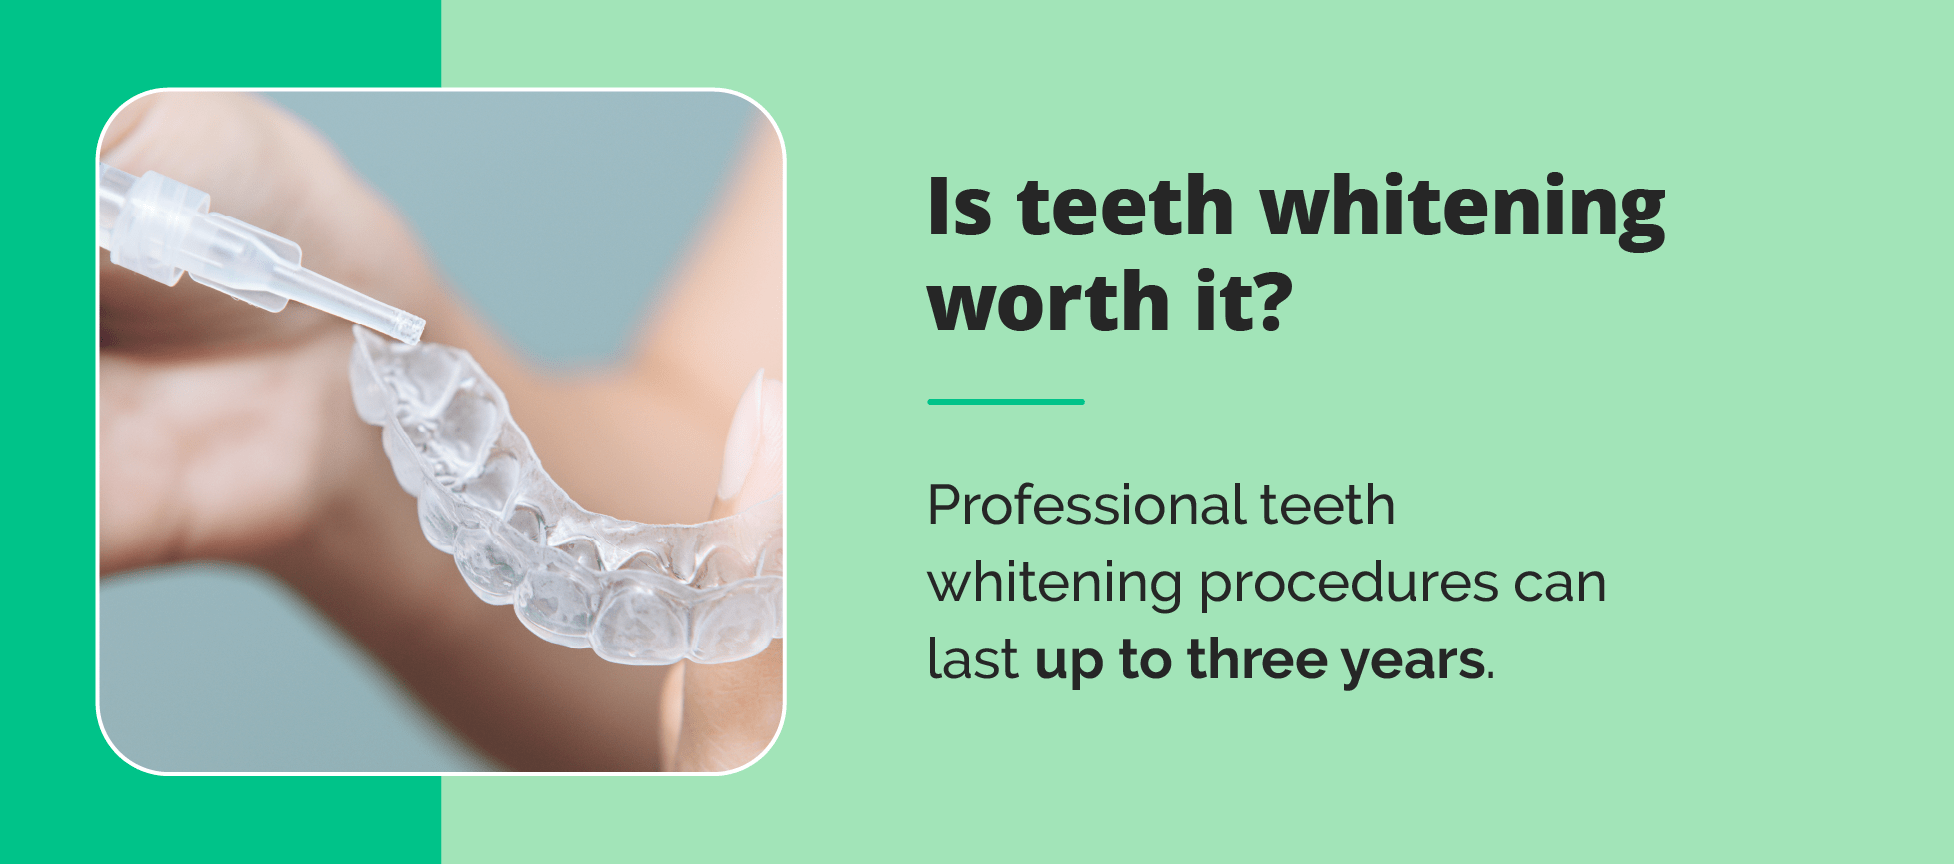 Is teeth whitening worth it? 